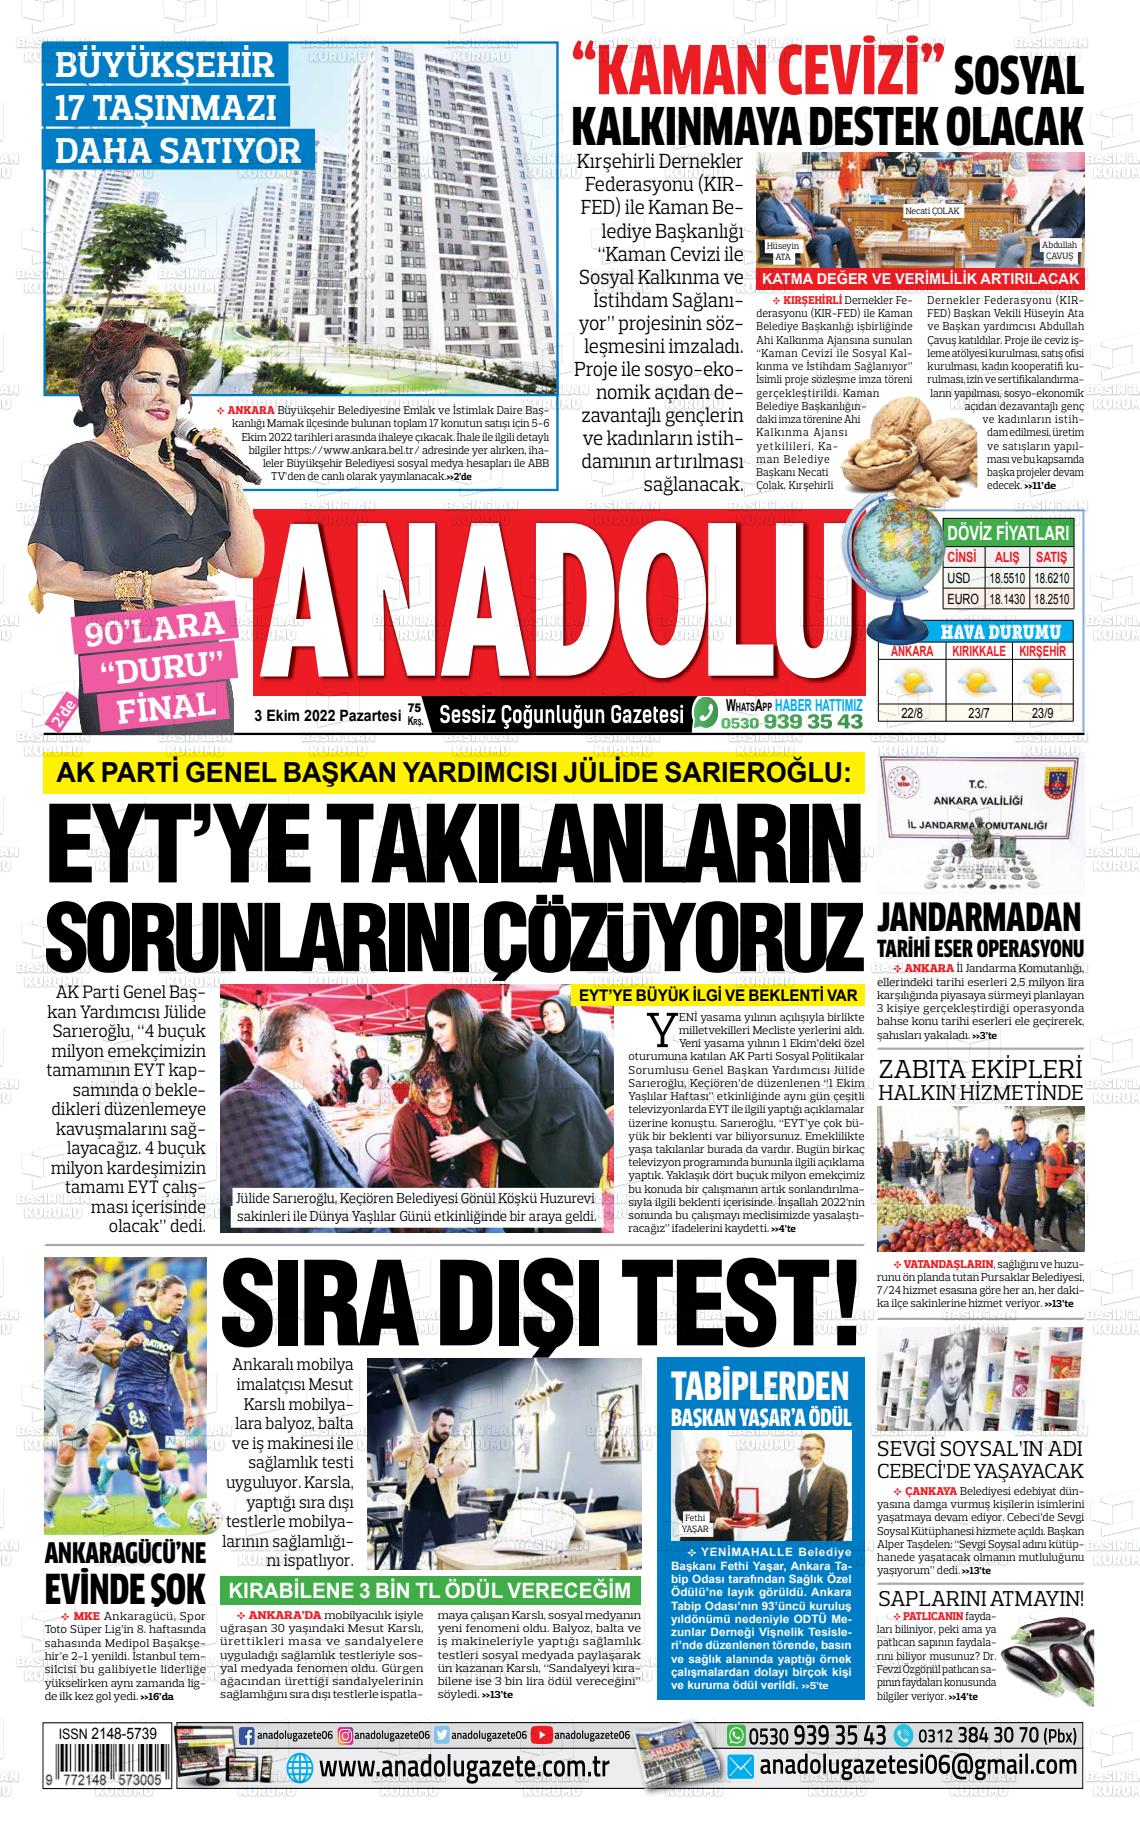 03 Ekim 2022 Ankara Anadolu Gazete Manşeti